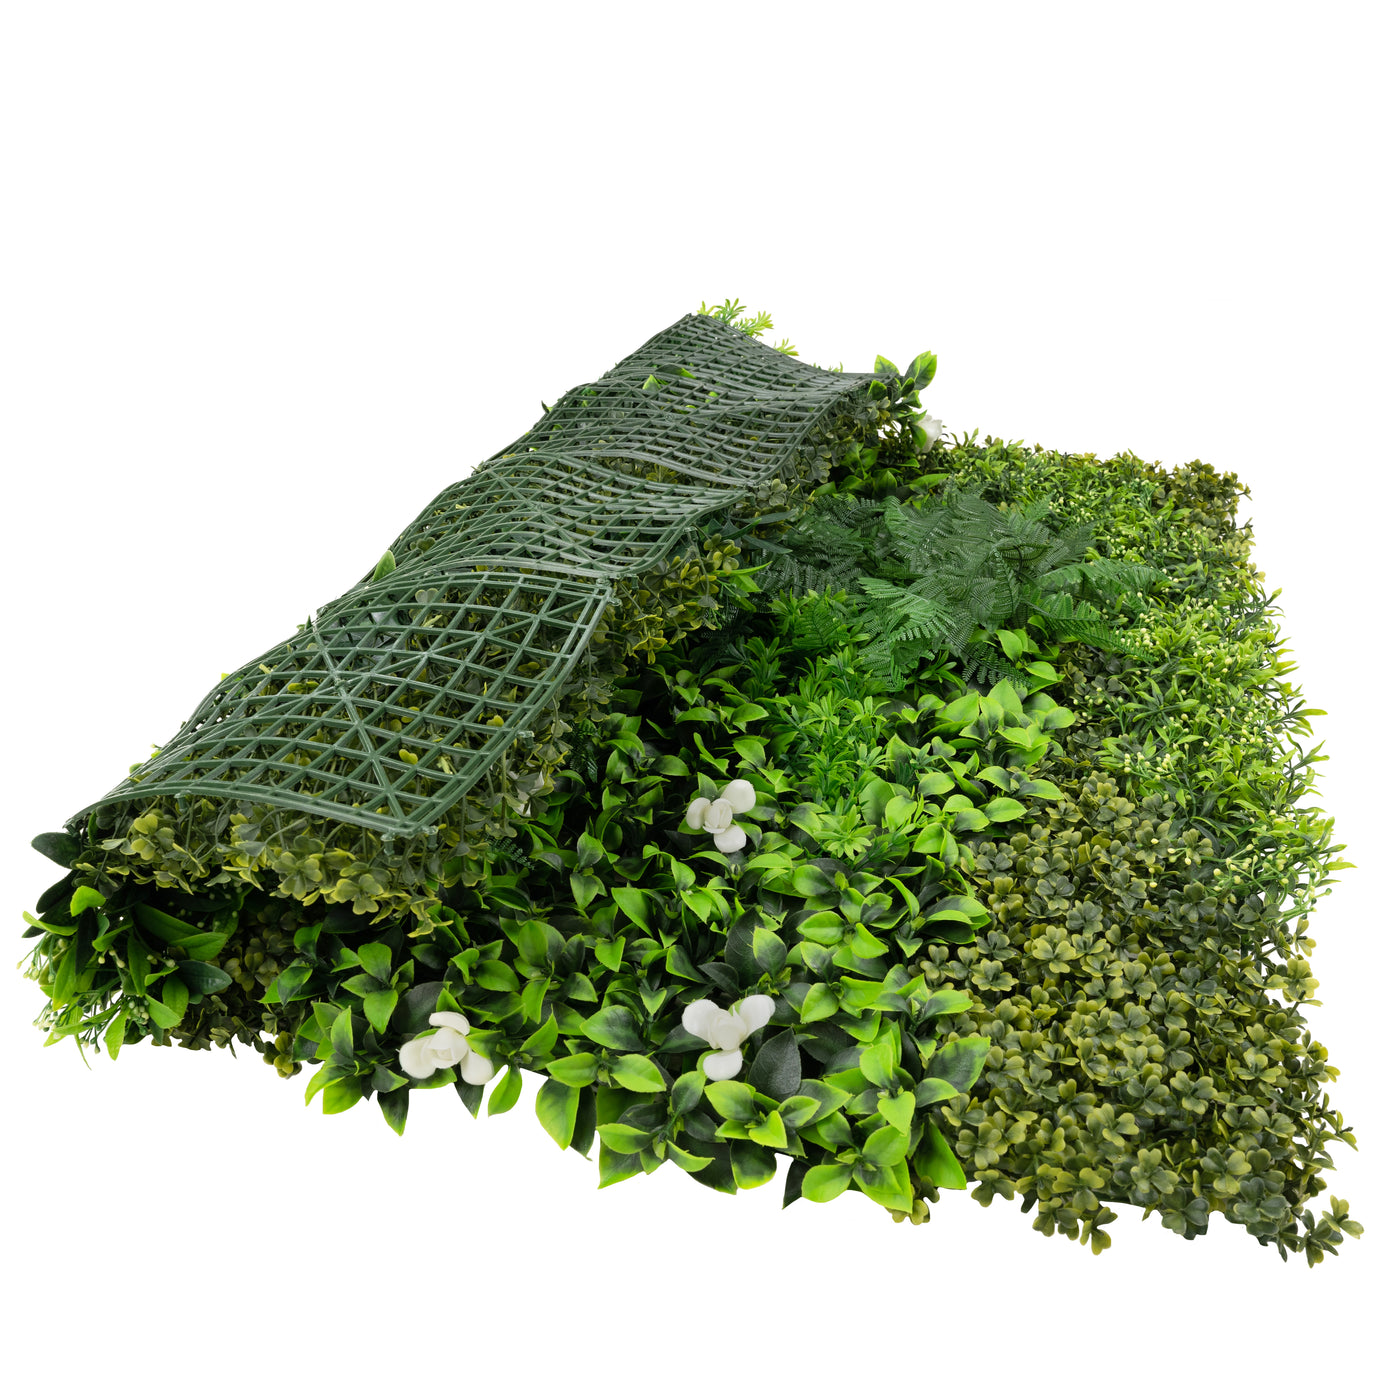 Gradina verticala din plante artificiale 1mp model design V40 pentru interior si exterior